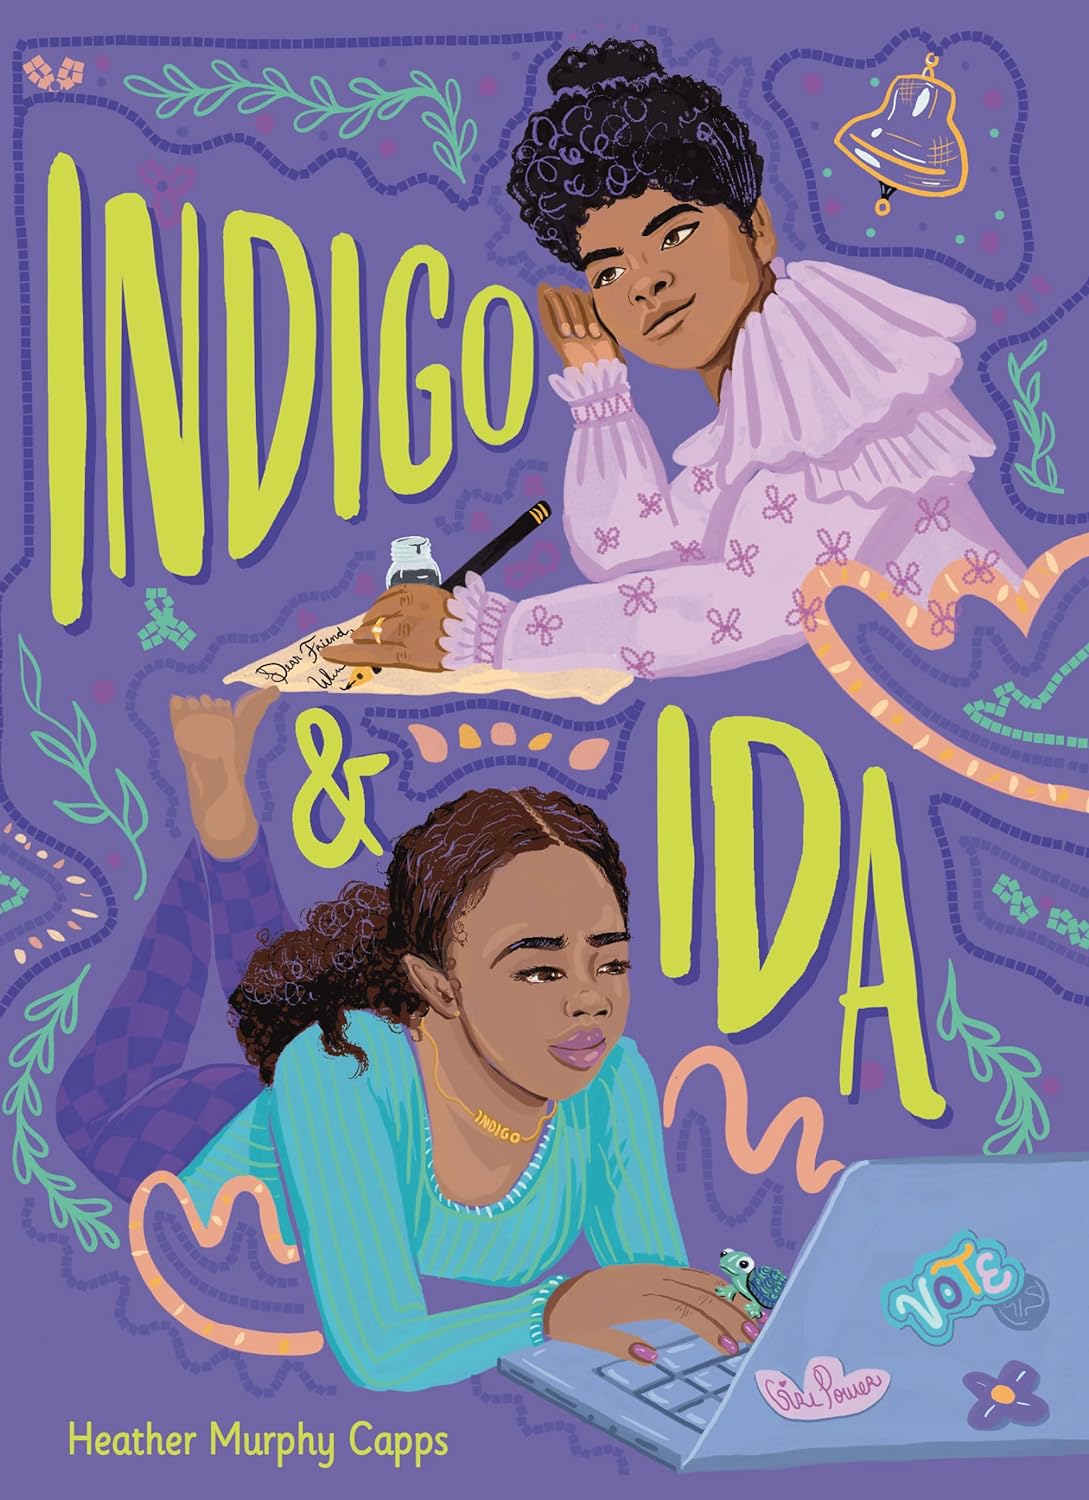 Indigo & Ida (book discussion guide)